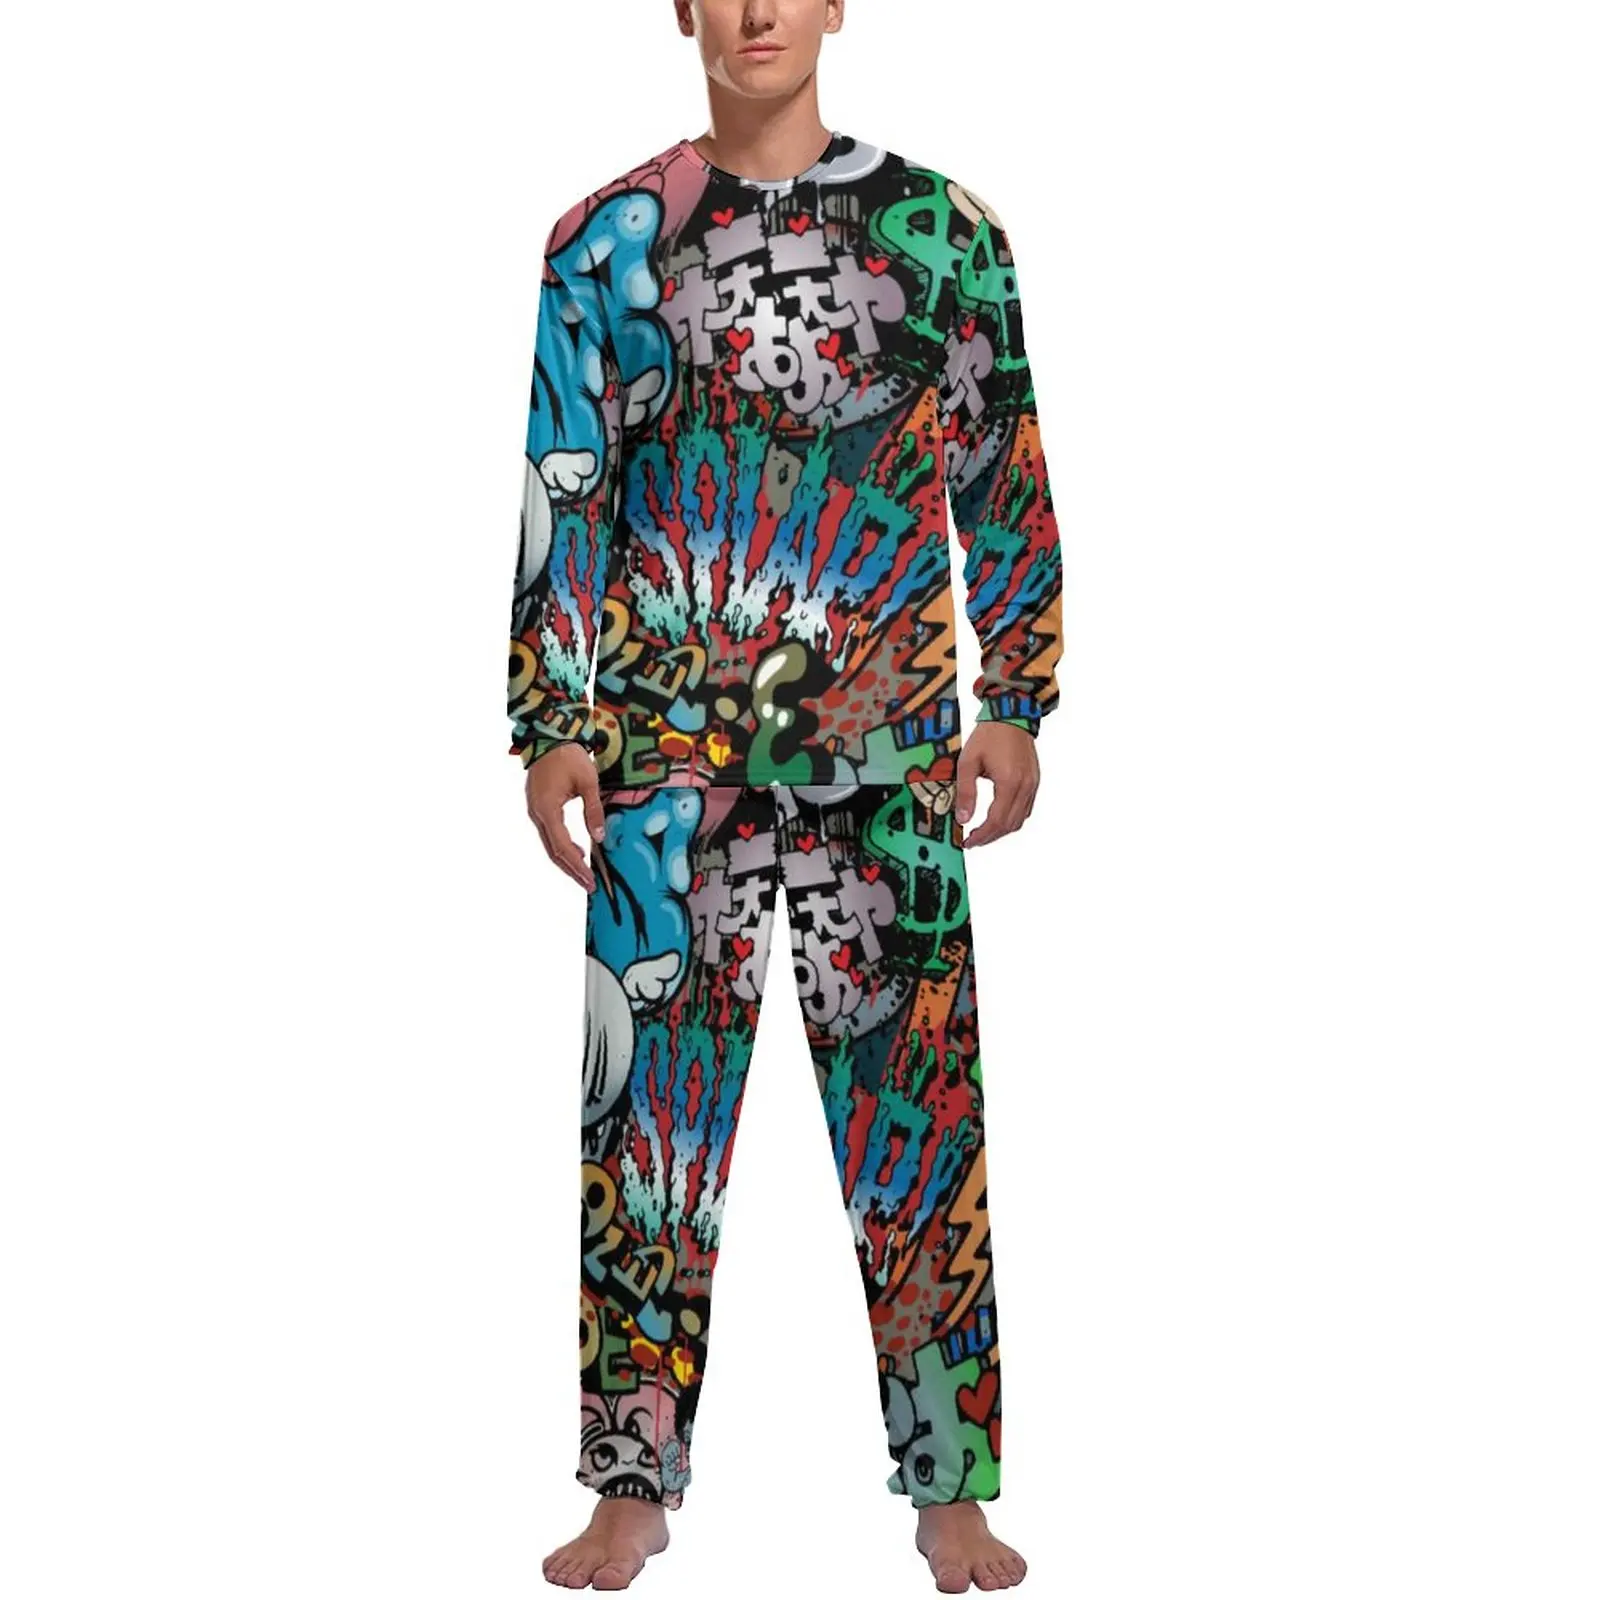 Funny Word Graffiti Pajamas Daily Letter Print Casual Sleepwear Man 2 Pieces Design Long Sleeve Cool Pajamas Set